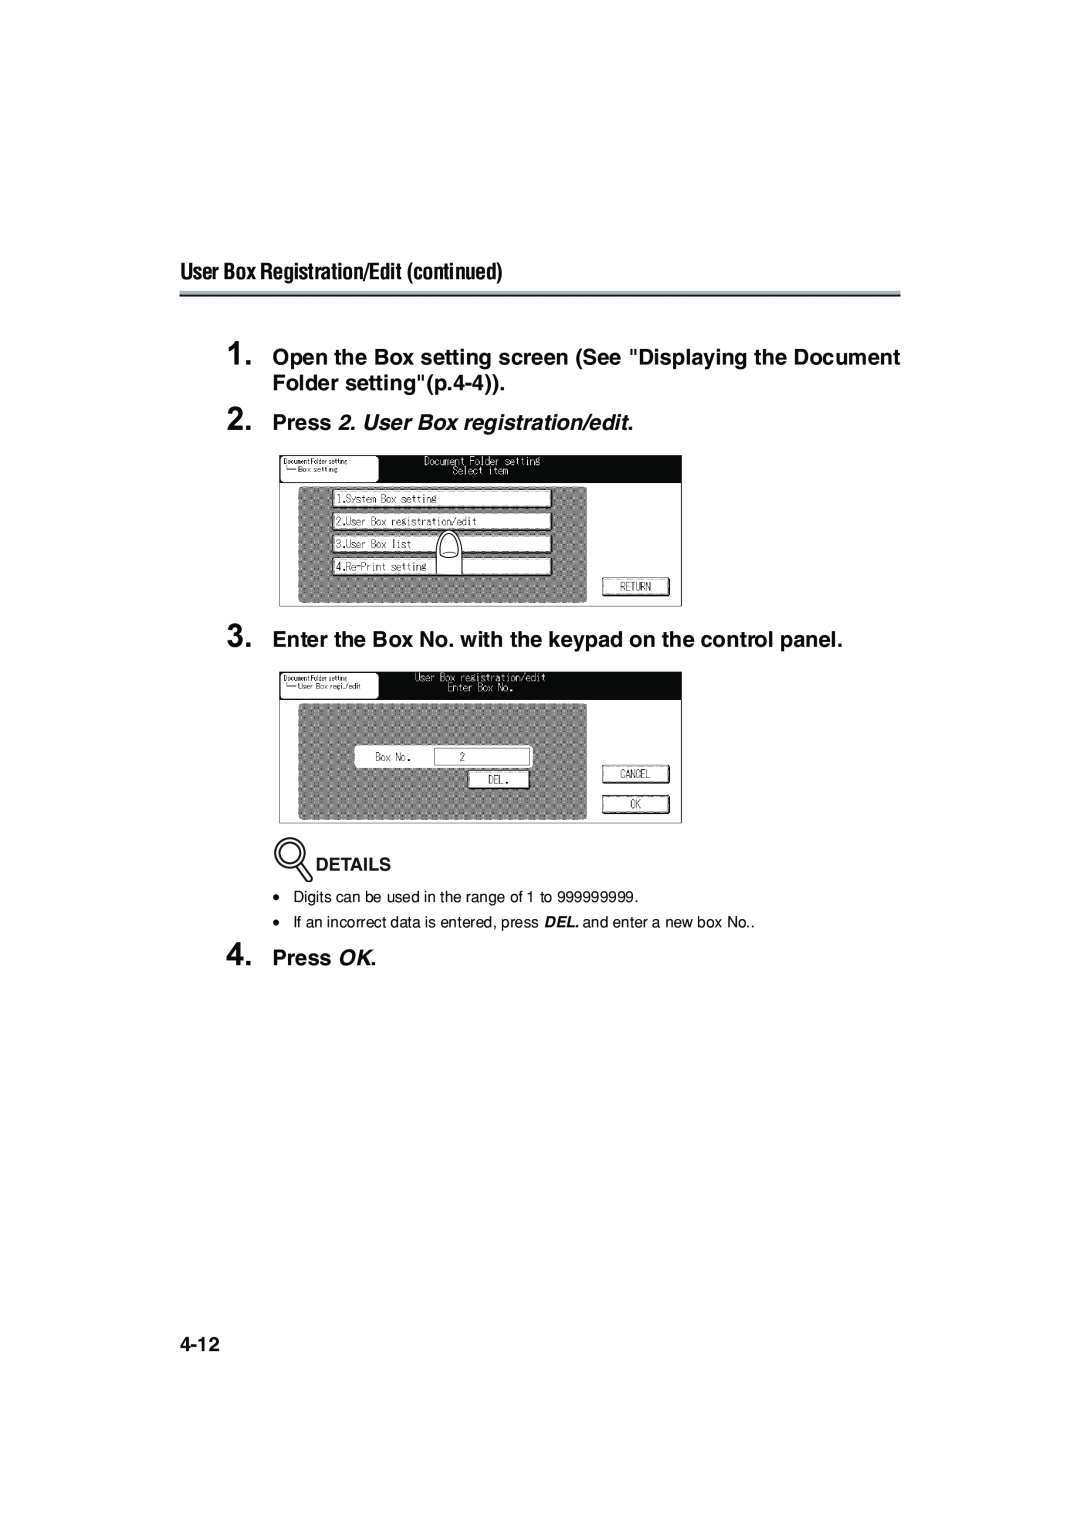 Konica Minolta 7222 manual User Box Registration/Edit continued, Press 2. User Box registration/edit, Press OK, Details 